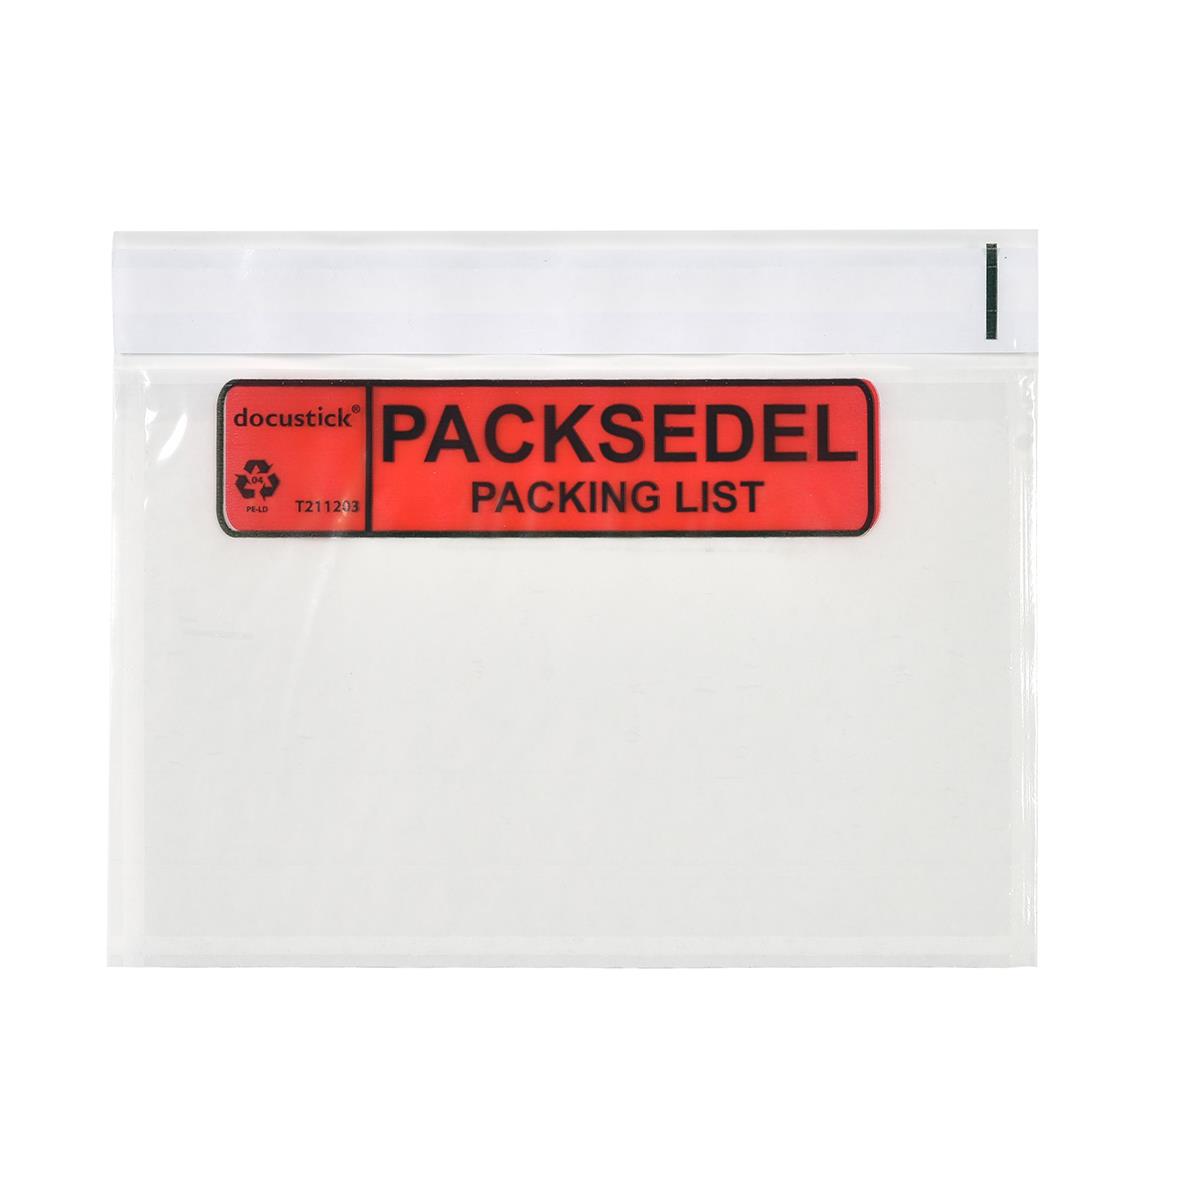 Packsedelskuvert extra kraftig med tryck C6 14070046